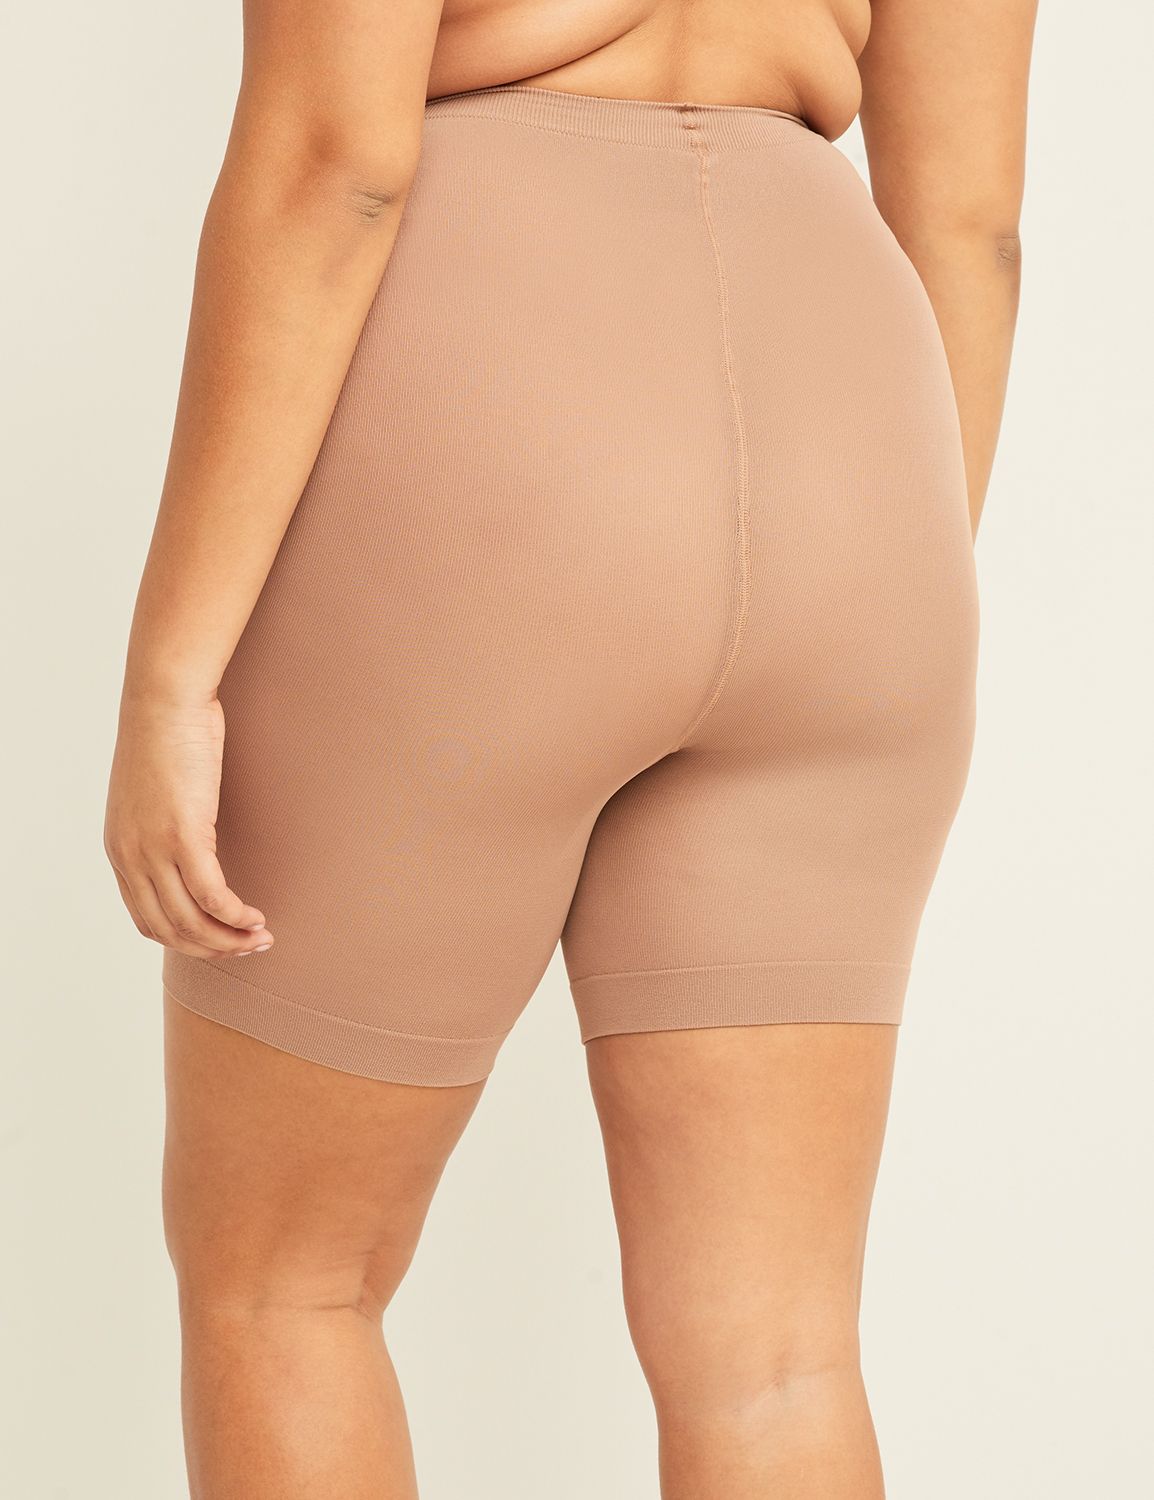 Women Slip Shorts for Under Dress Slimming Short Panties Anti